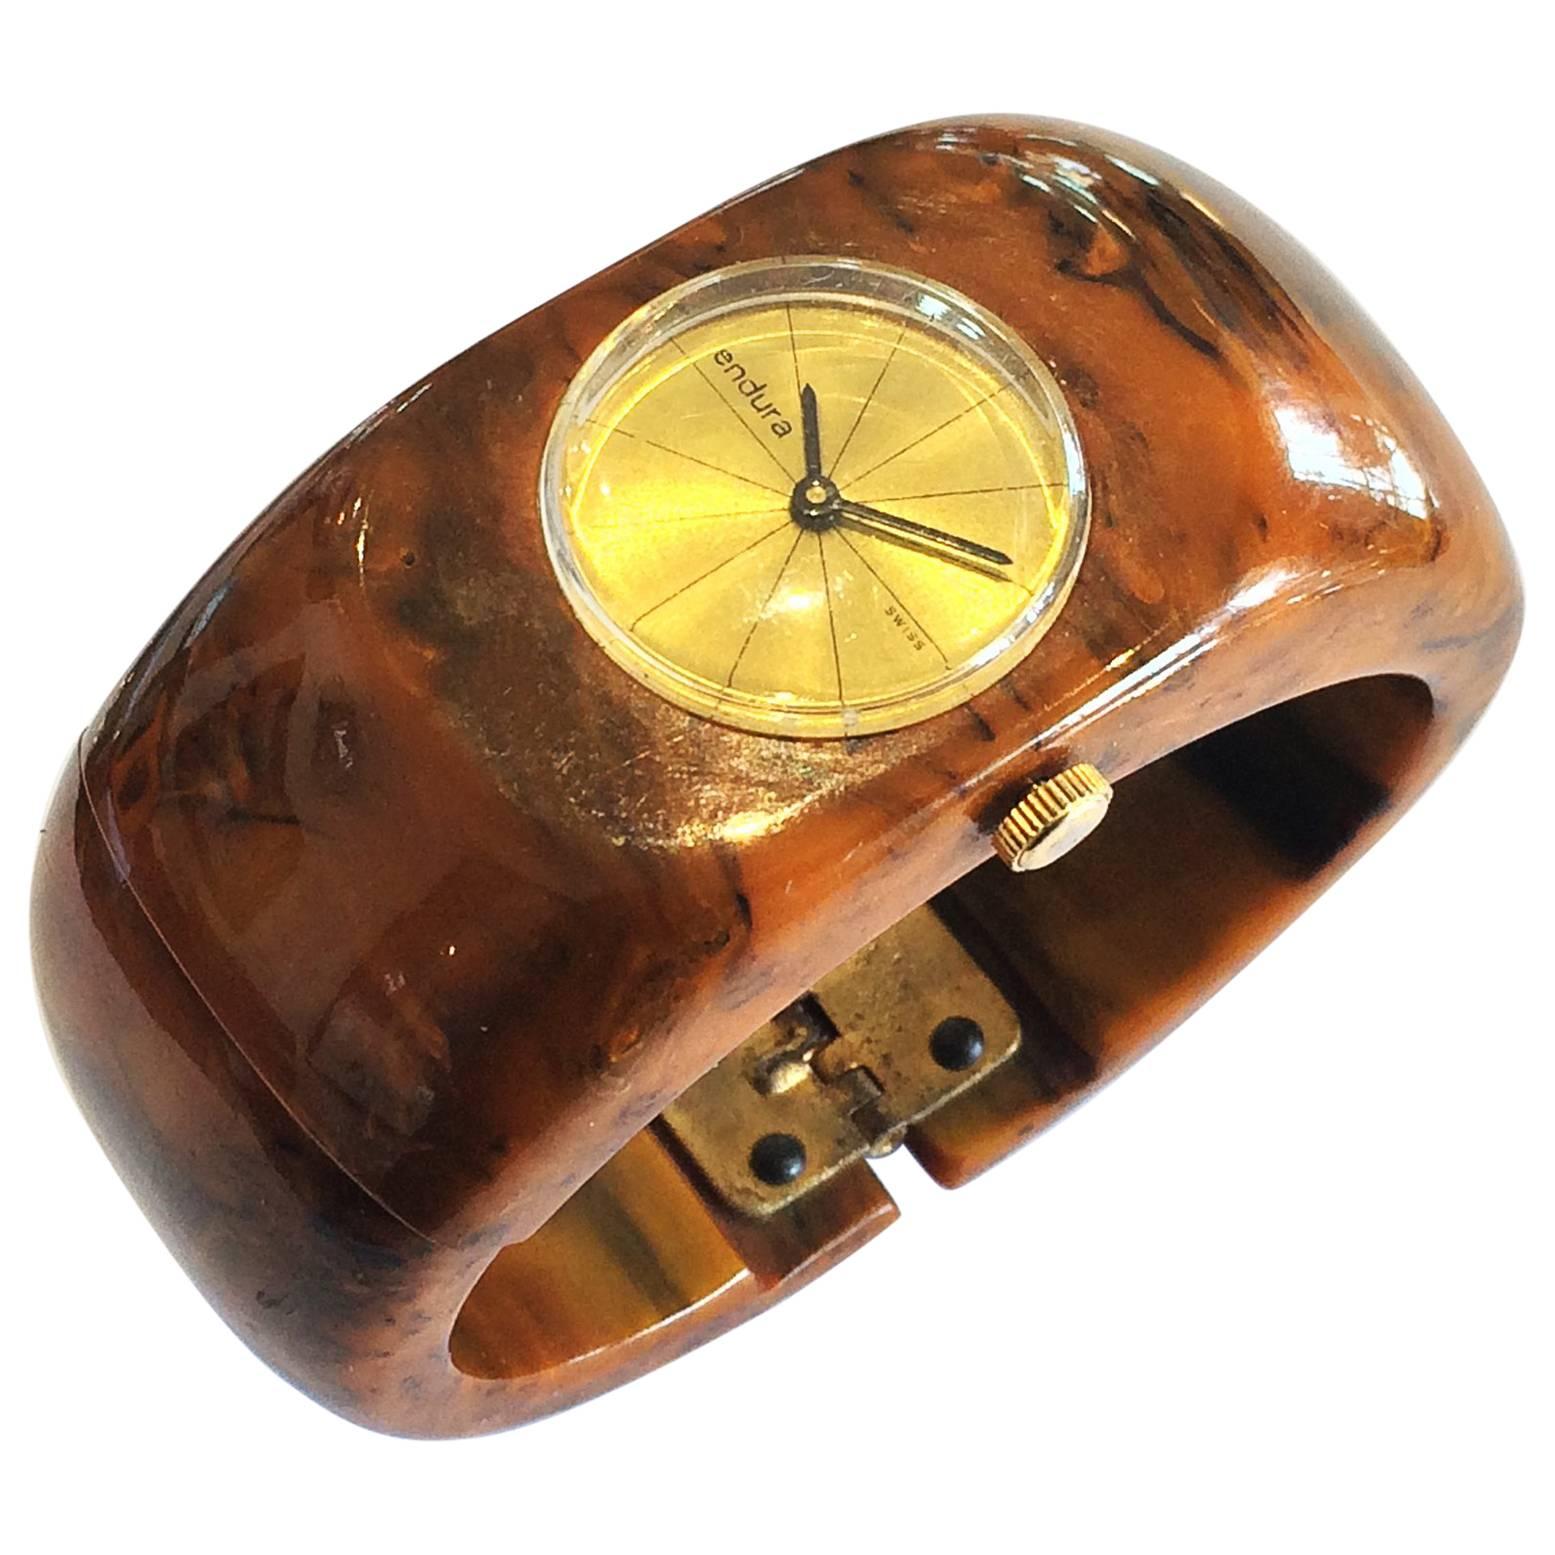 Art Deco Bakelite Watch by Endura in Mississippi Mud hinged clamper